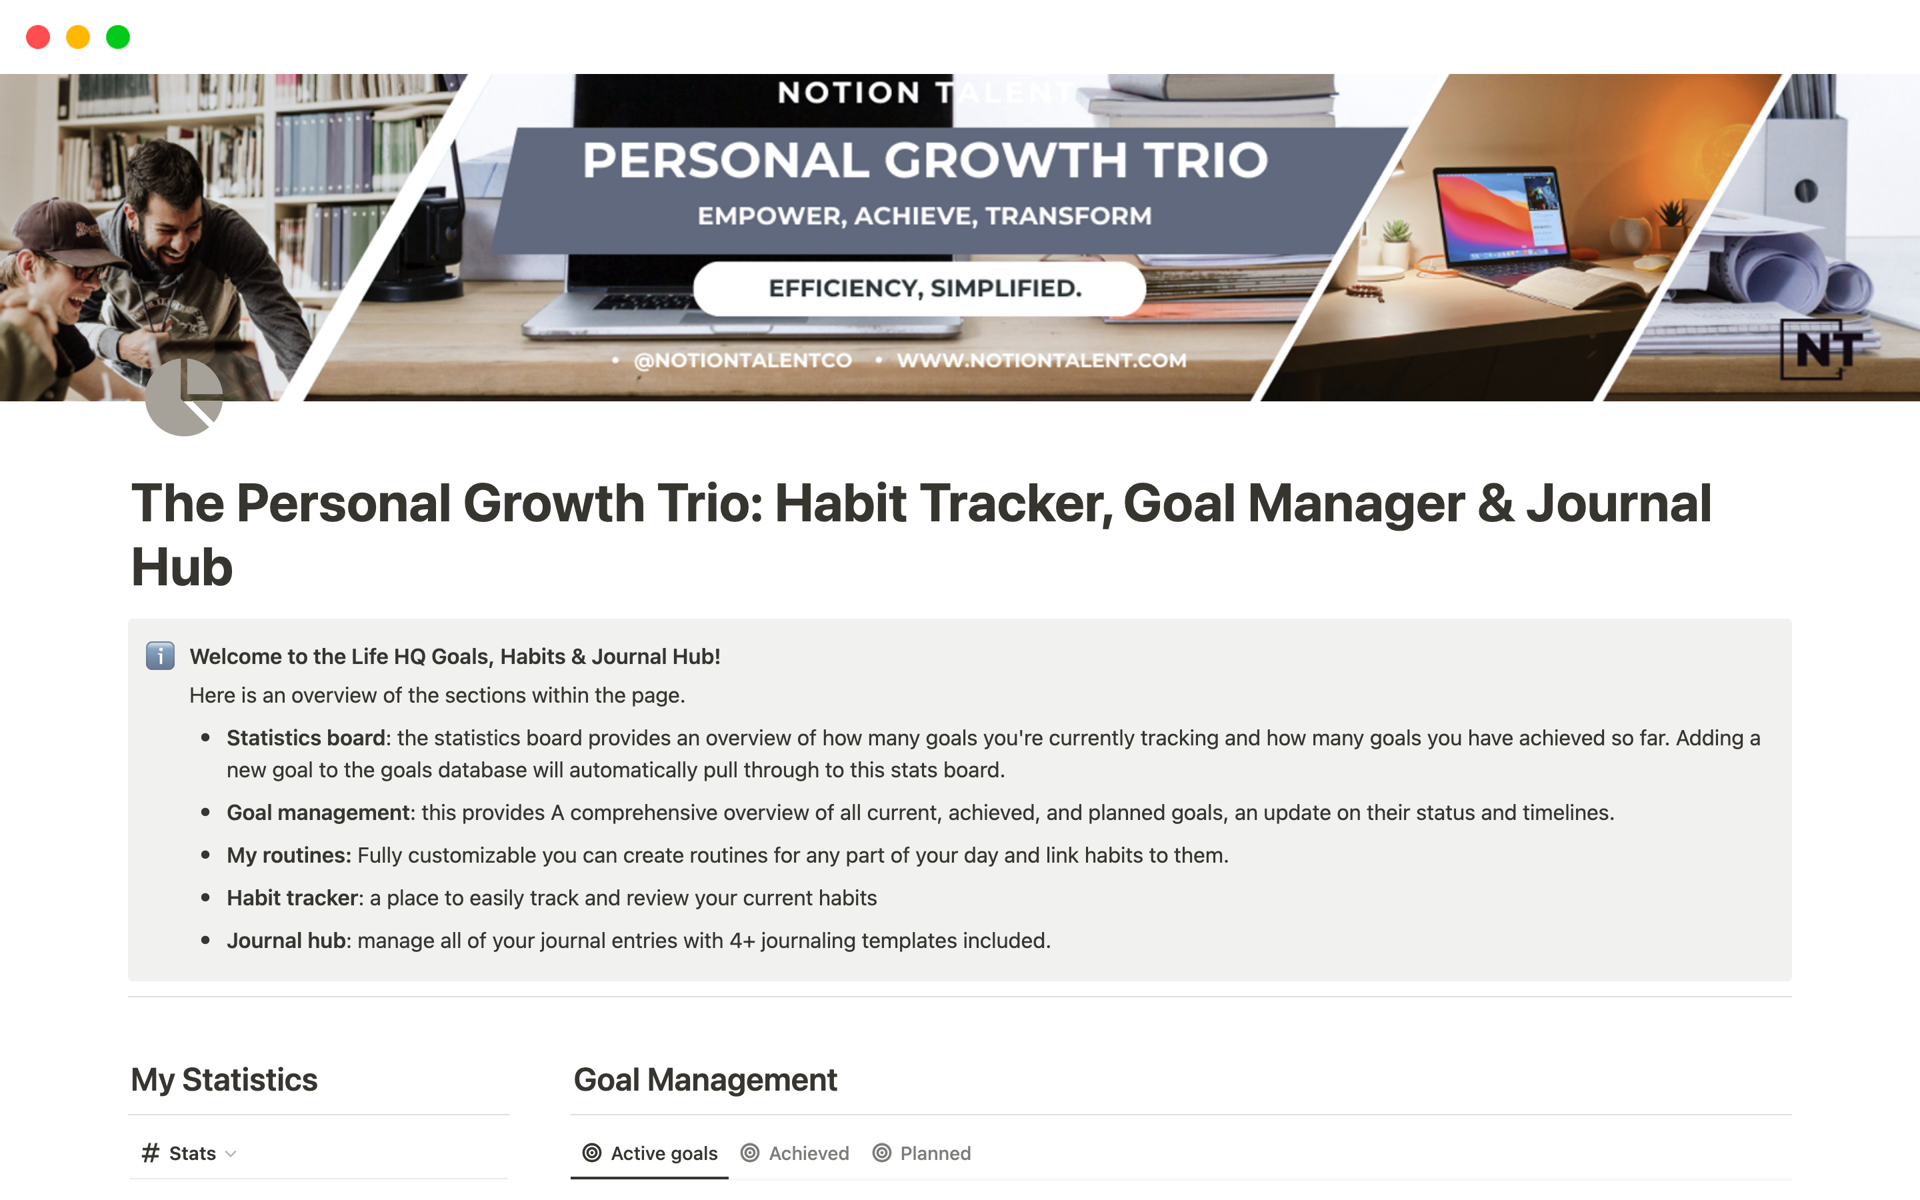 The Personal Growth Trio: Habits, Goals & Journal님의 템플릿 미리보기